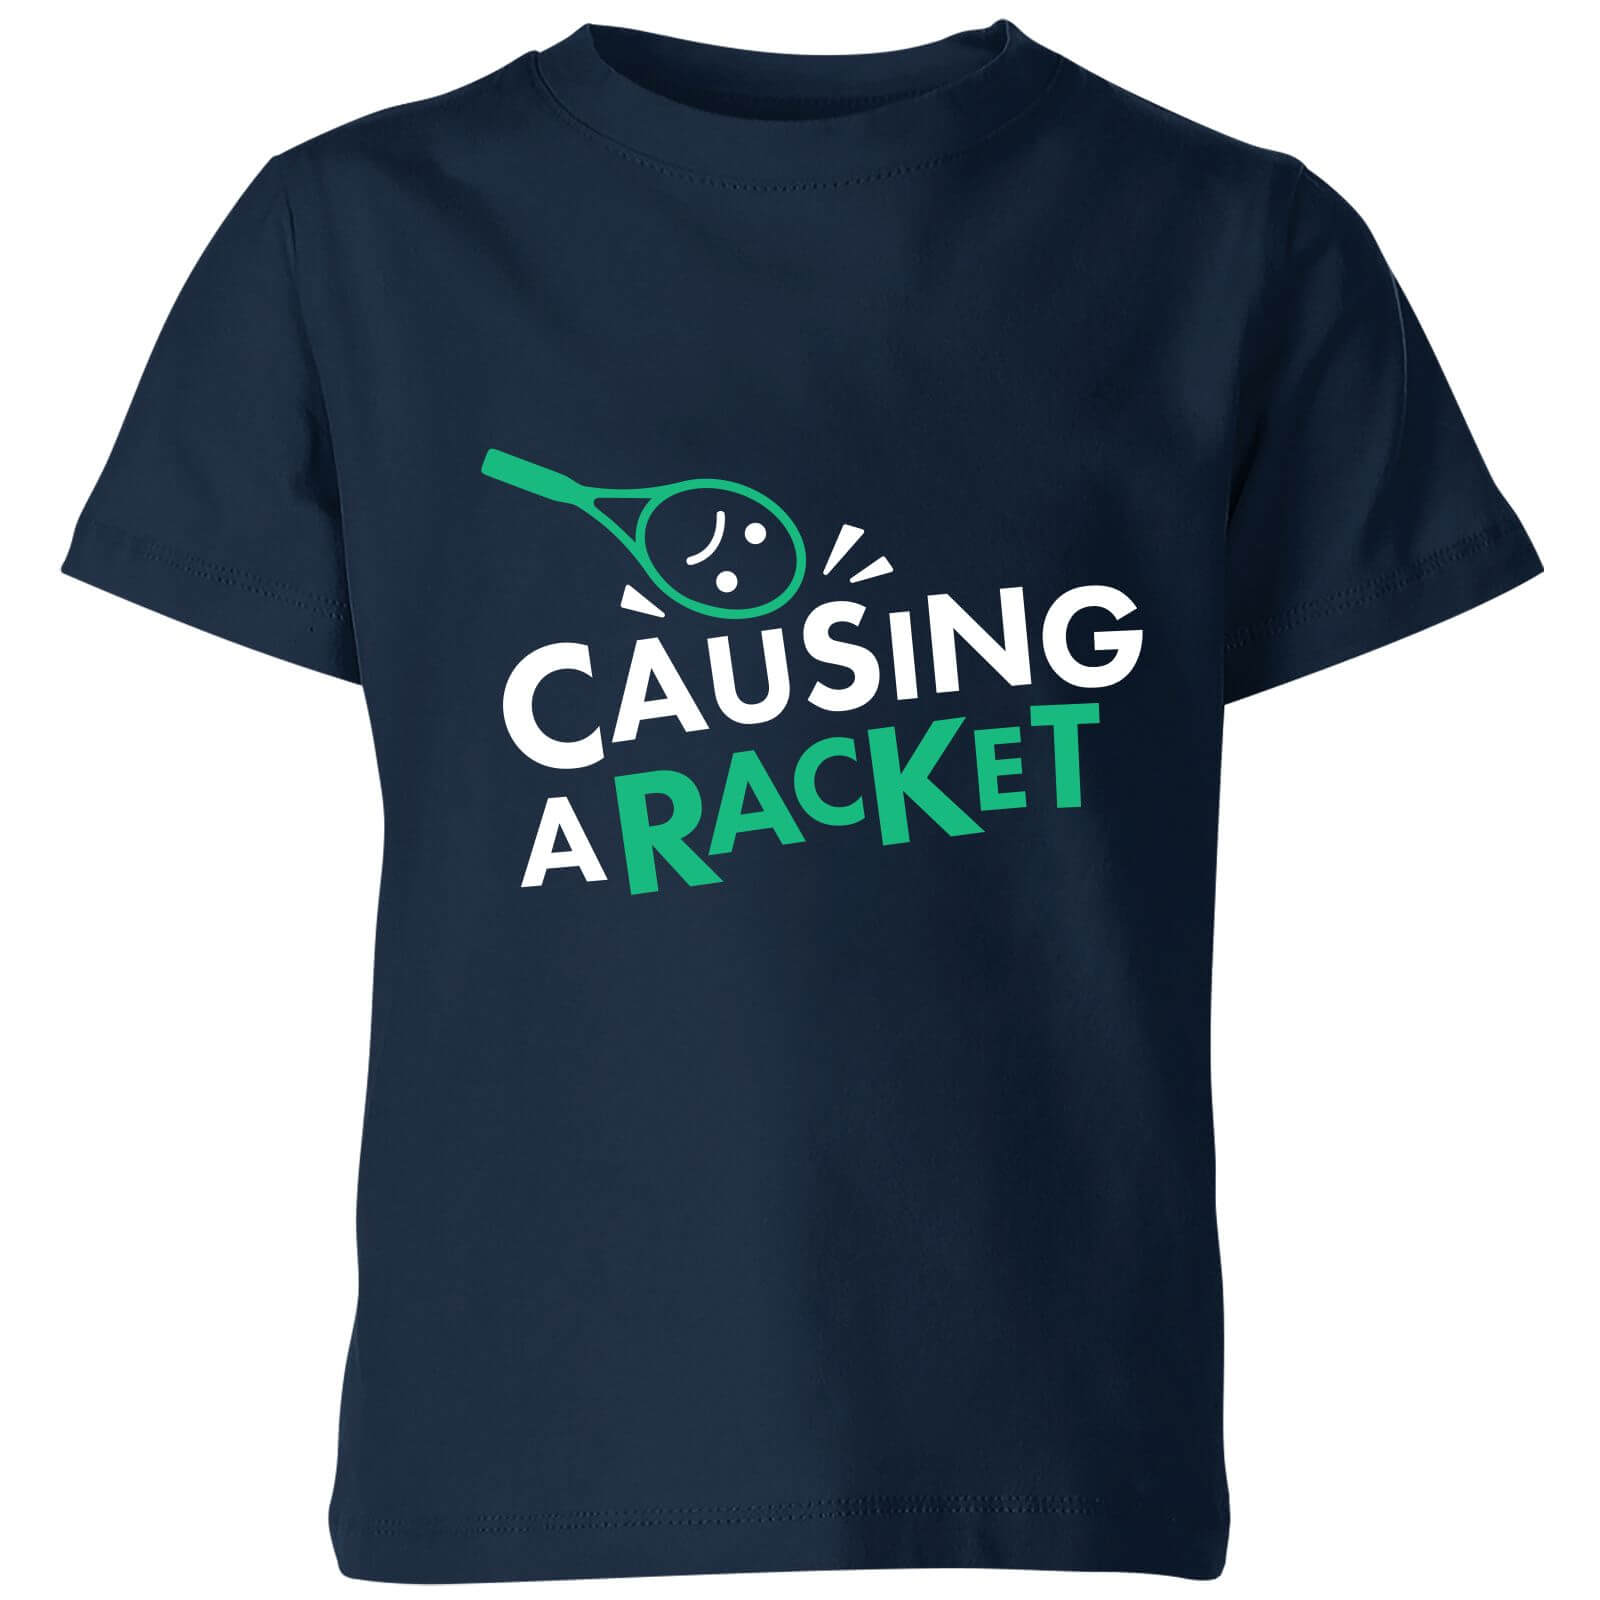 Causing a Racket Kids' T-Shirt - Navy - 3-4 Years - Navy